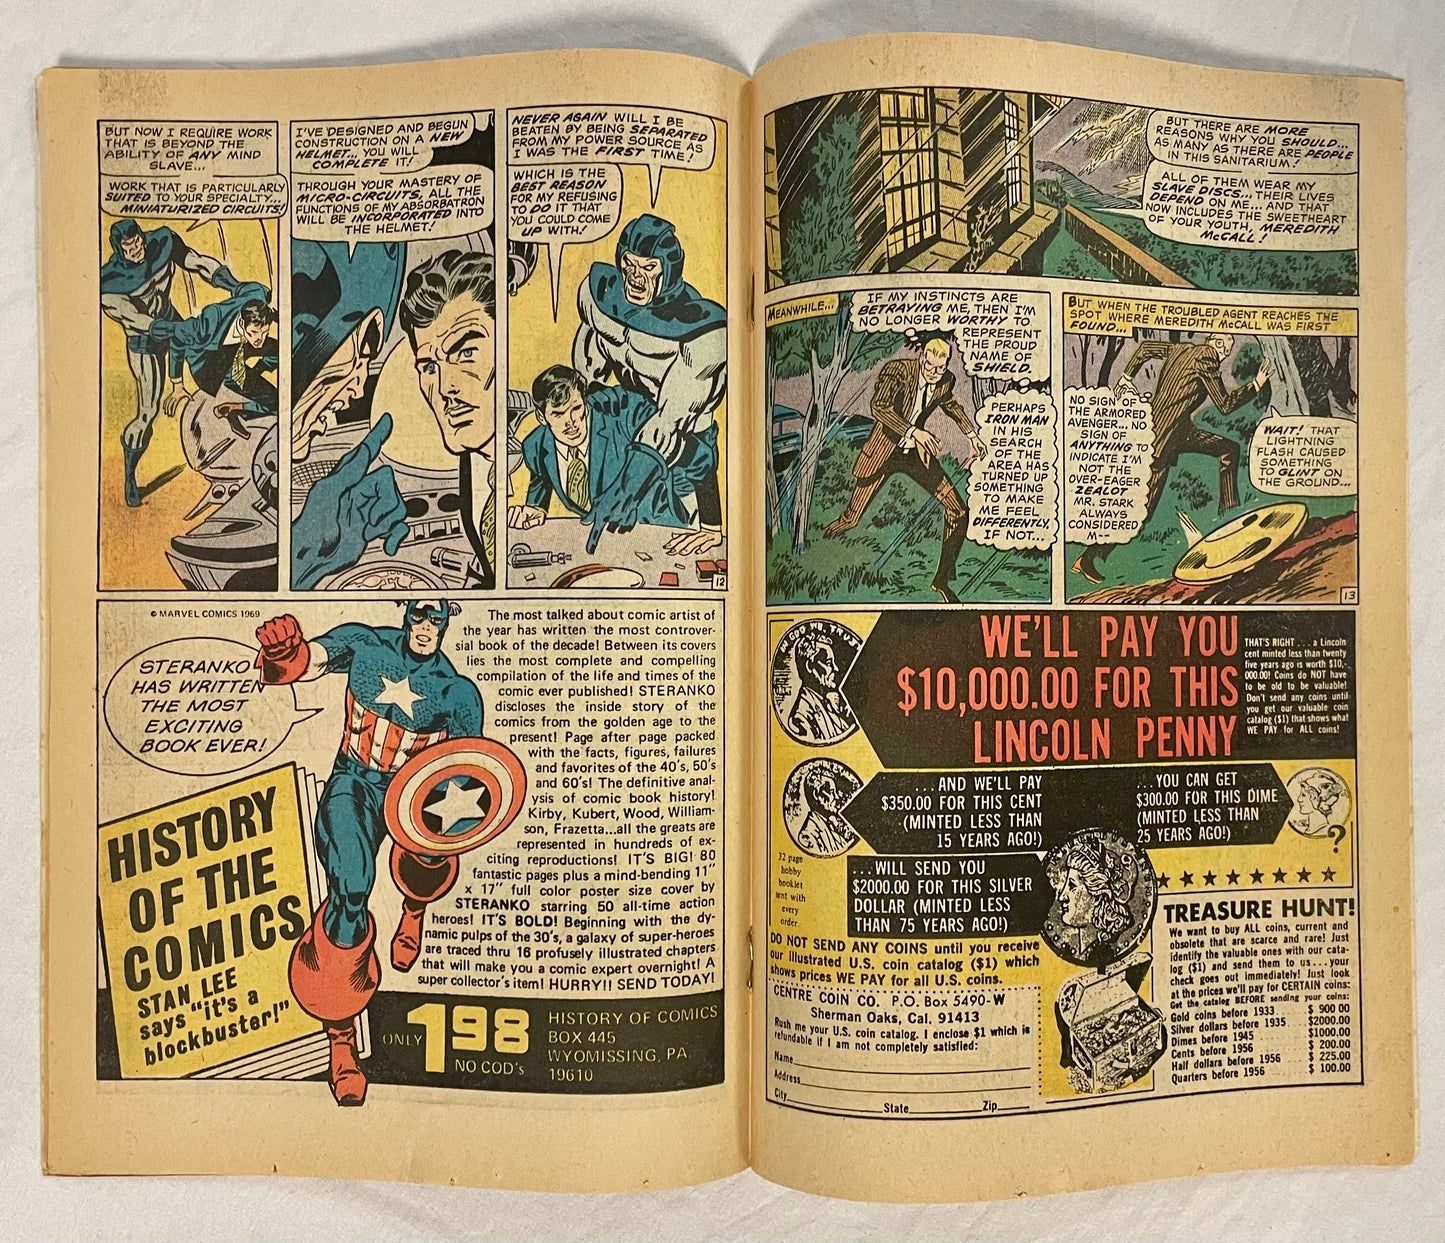 Marvel Comics The Invincible Iron Man #28